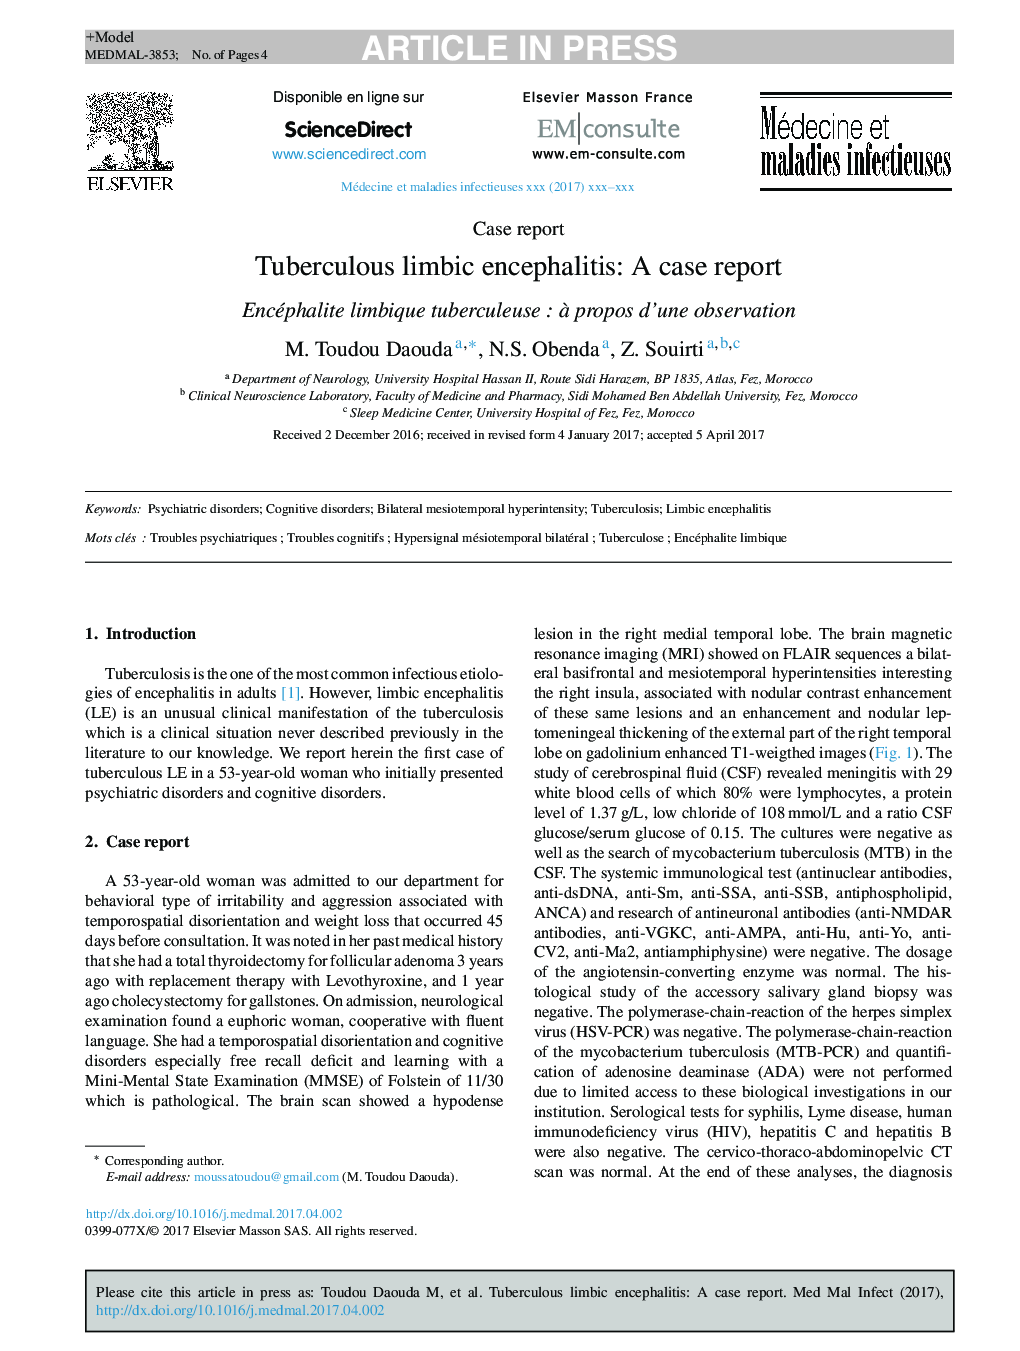 Tuberculous limbic encephalitis: A case report